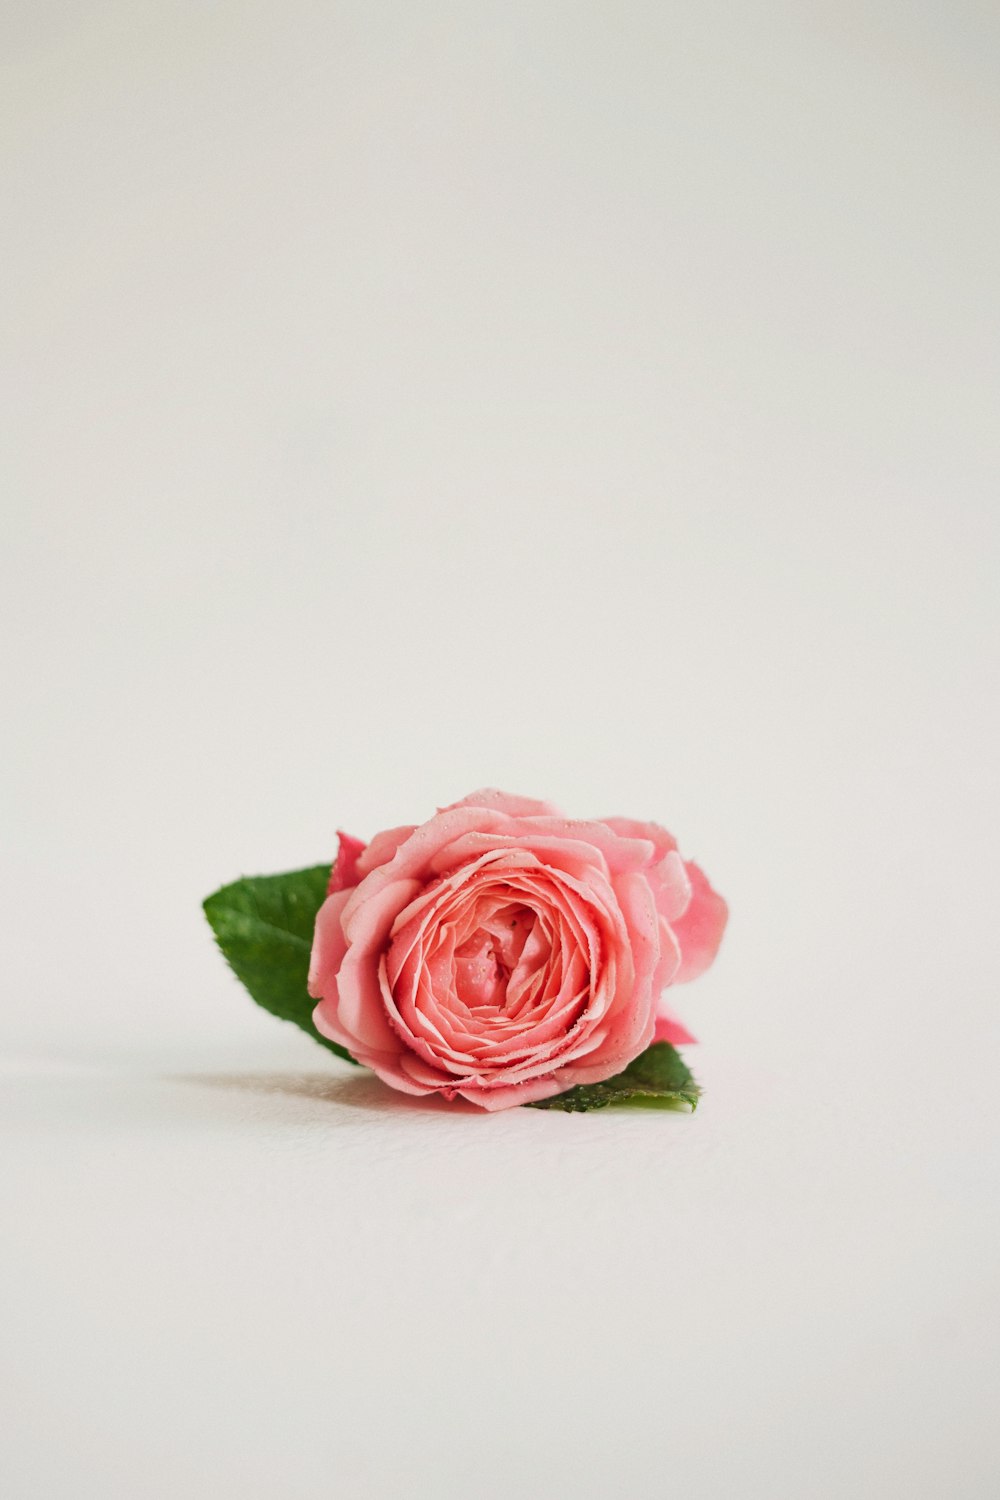 Una sola rosa rosa sobre un fondo blanco